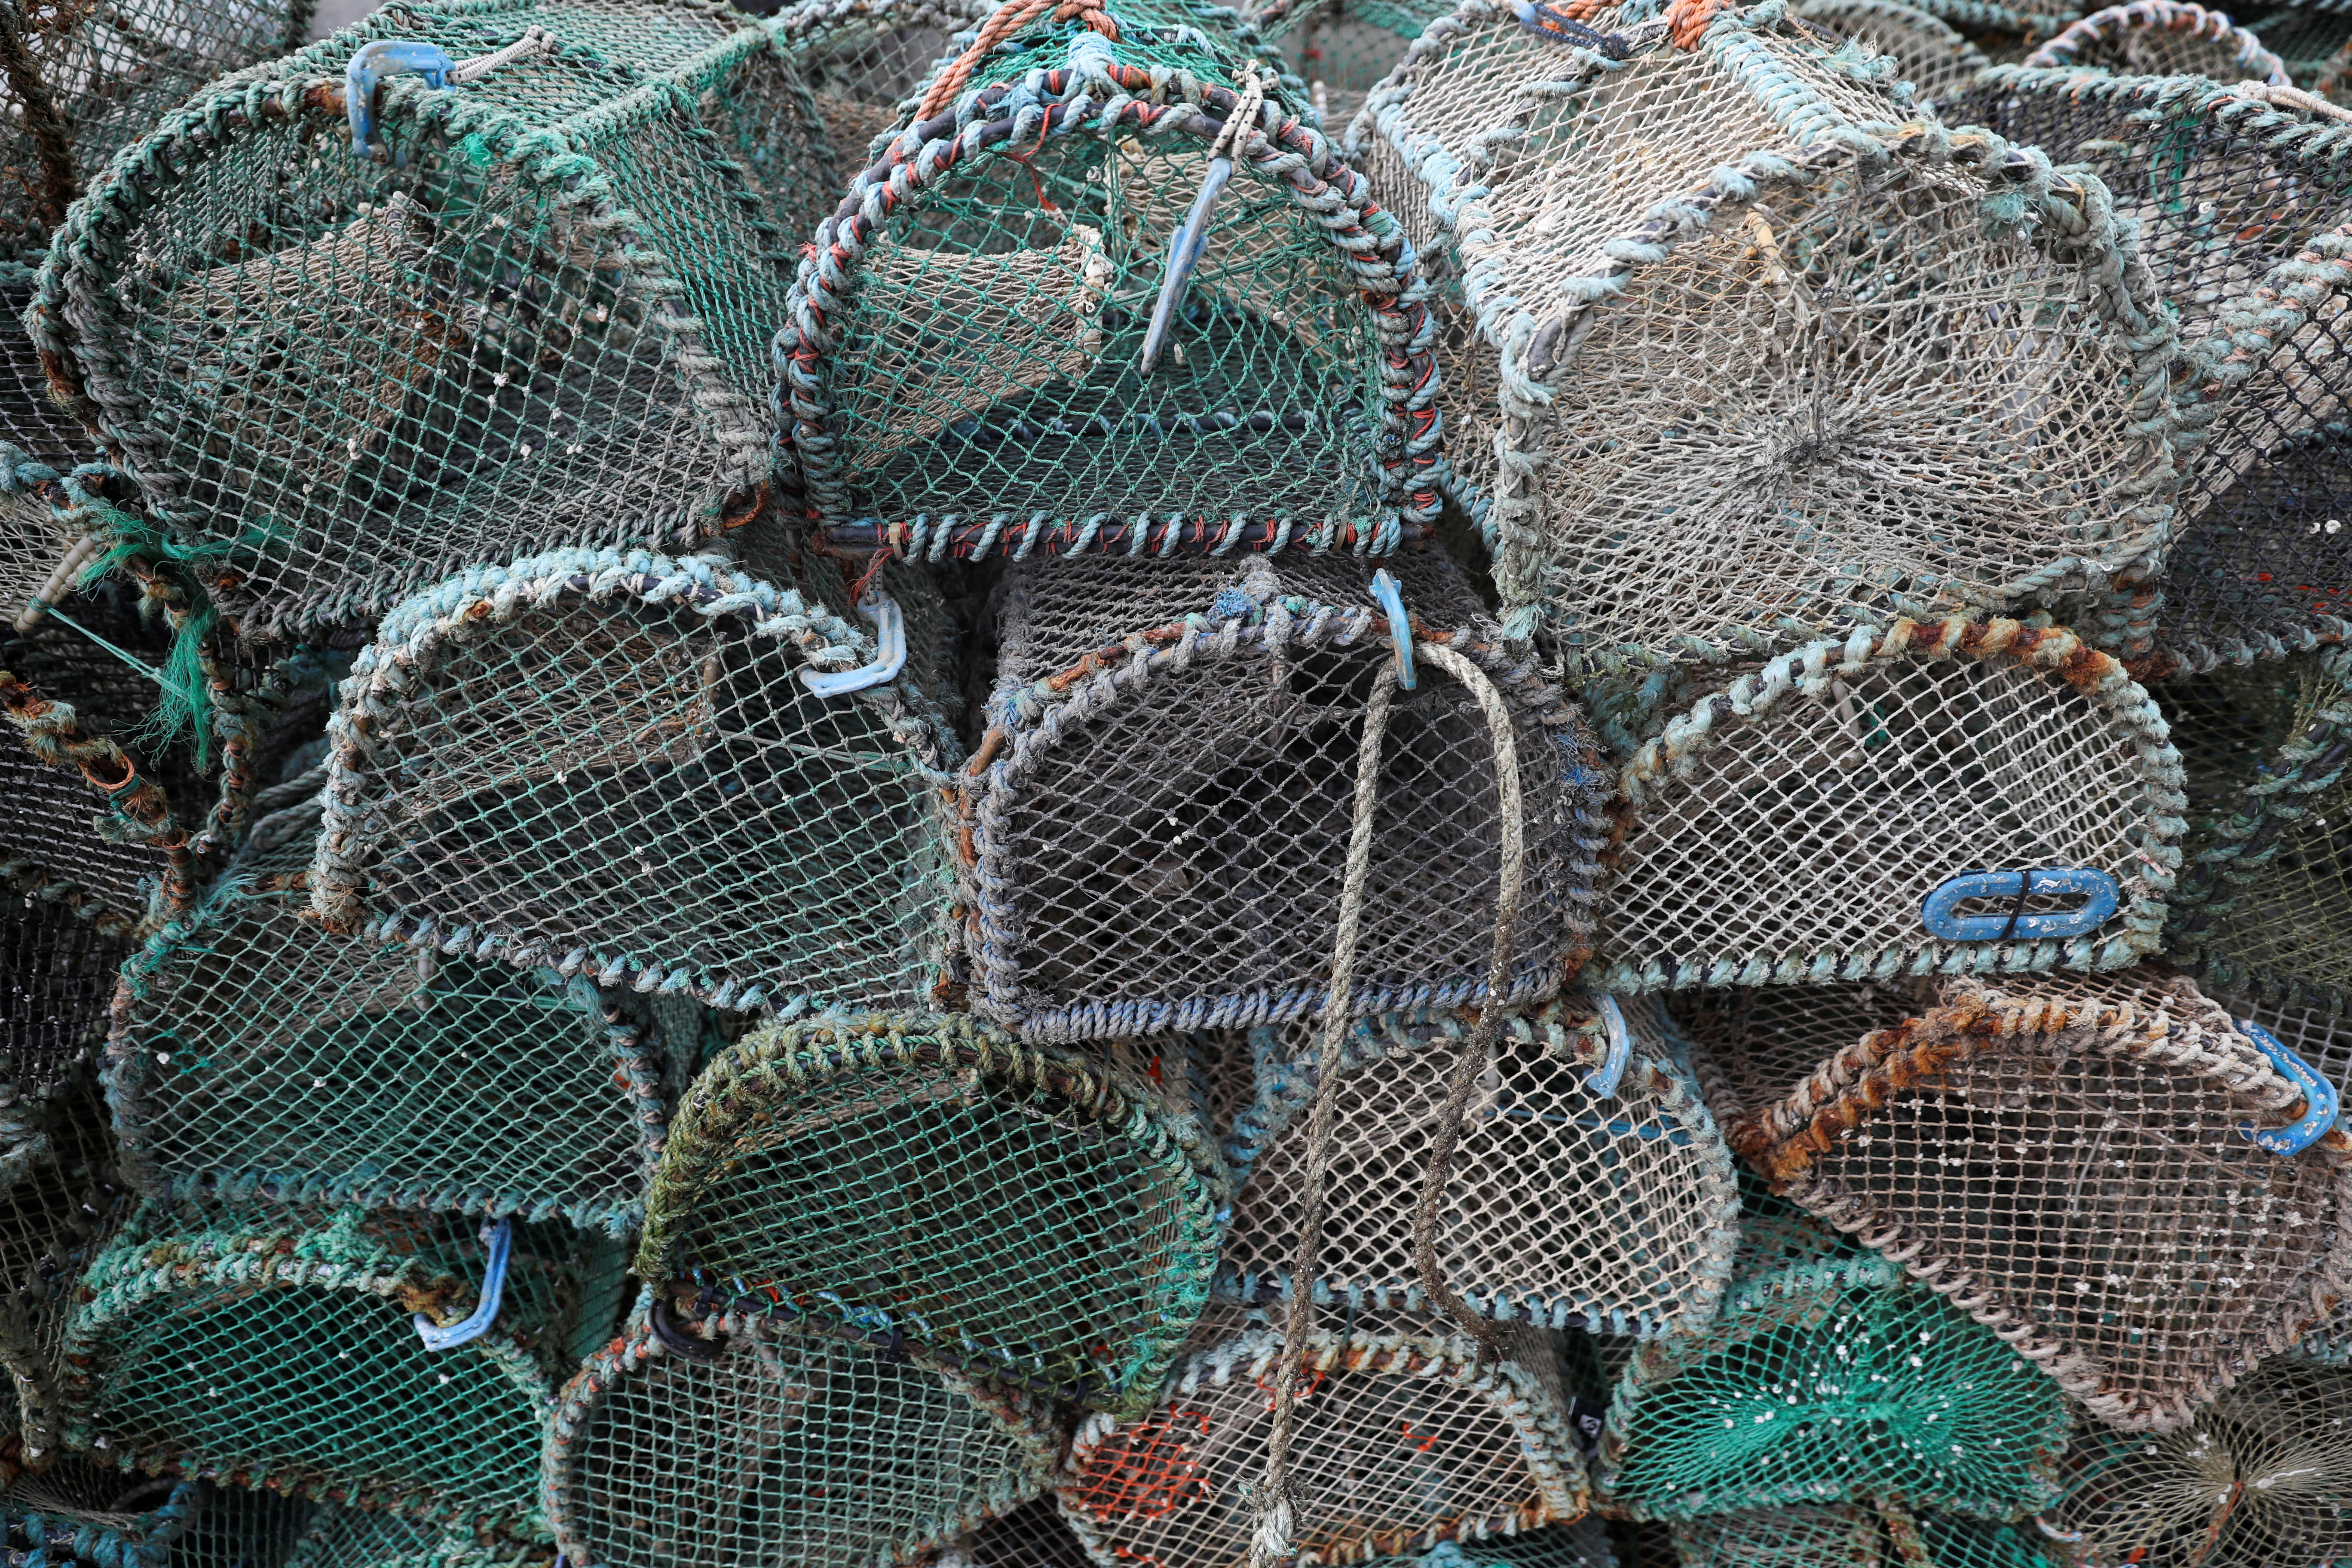 Fishing creels are seen near Oban